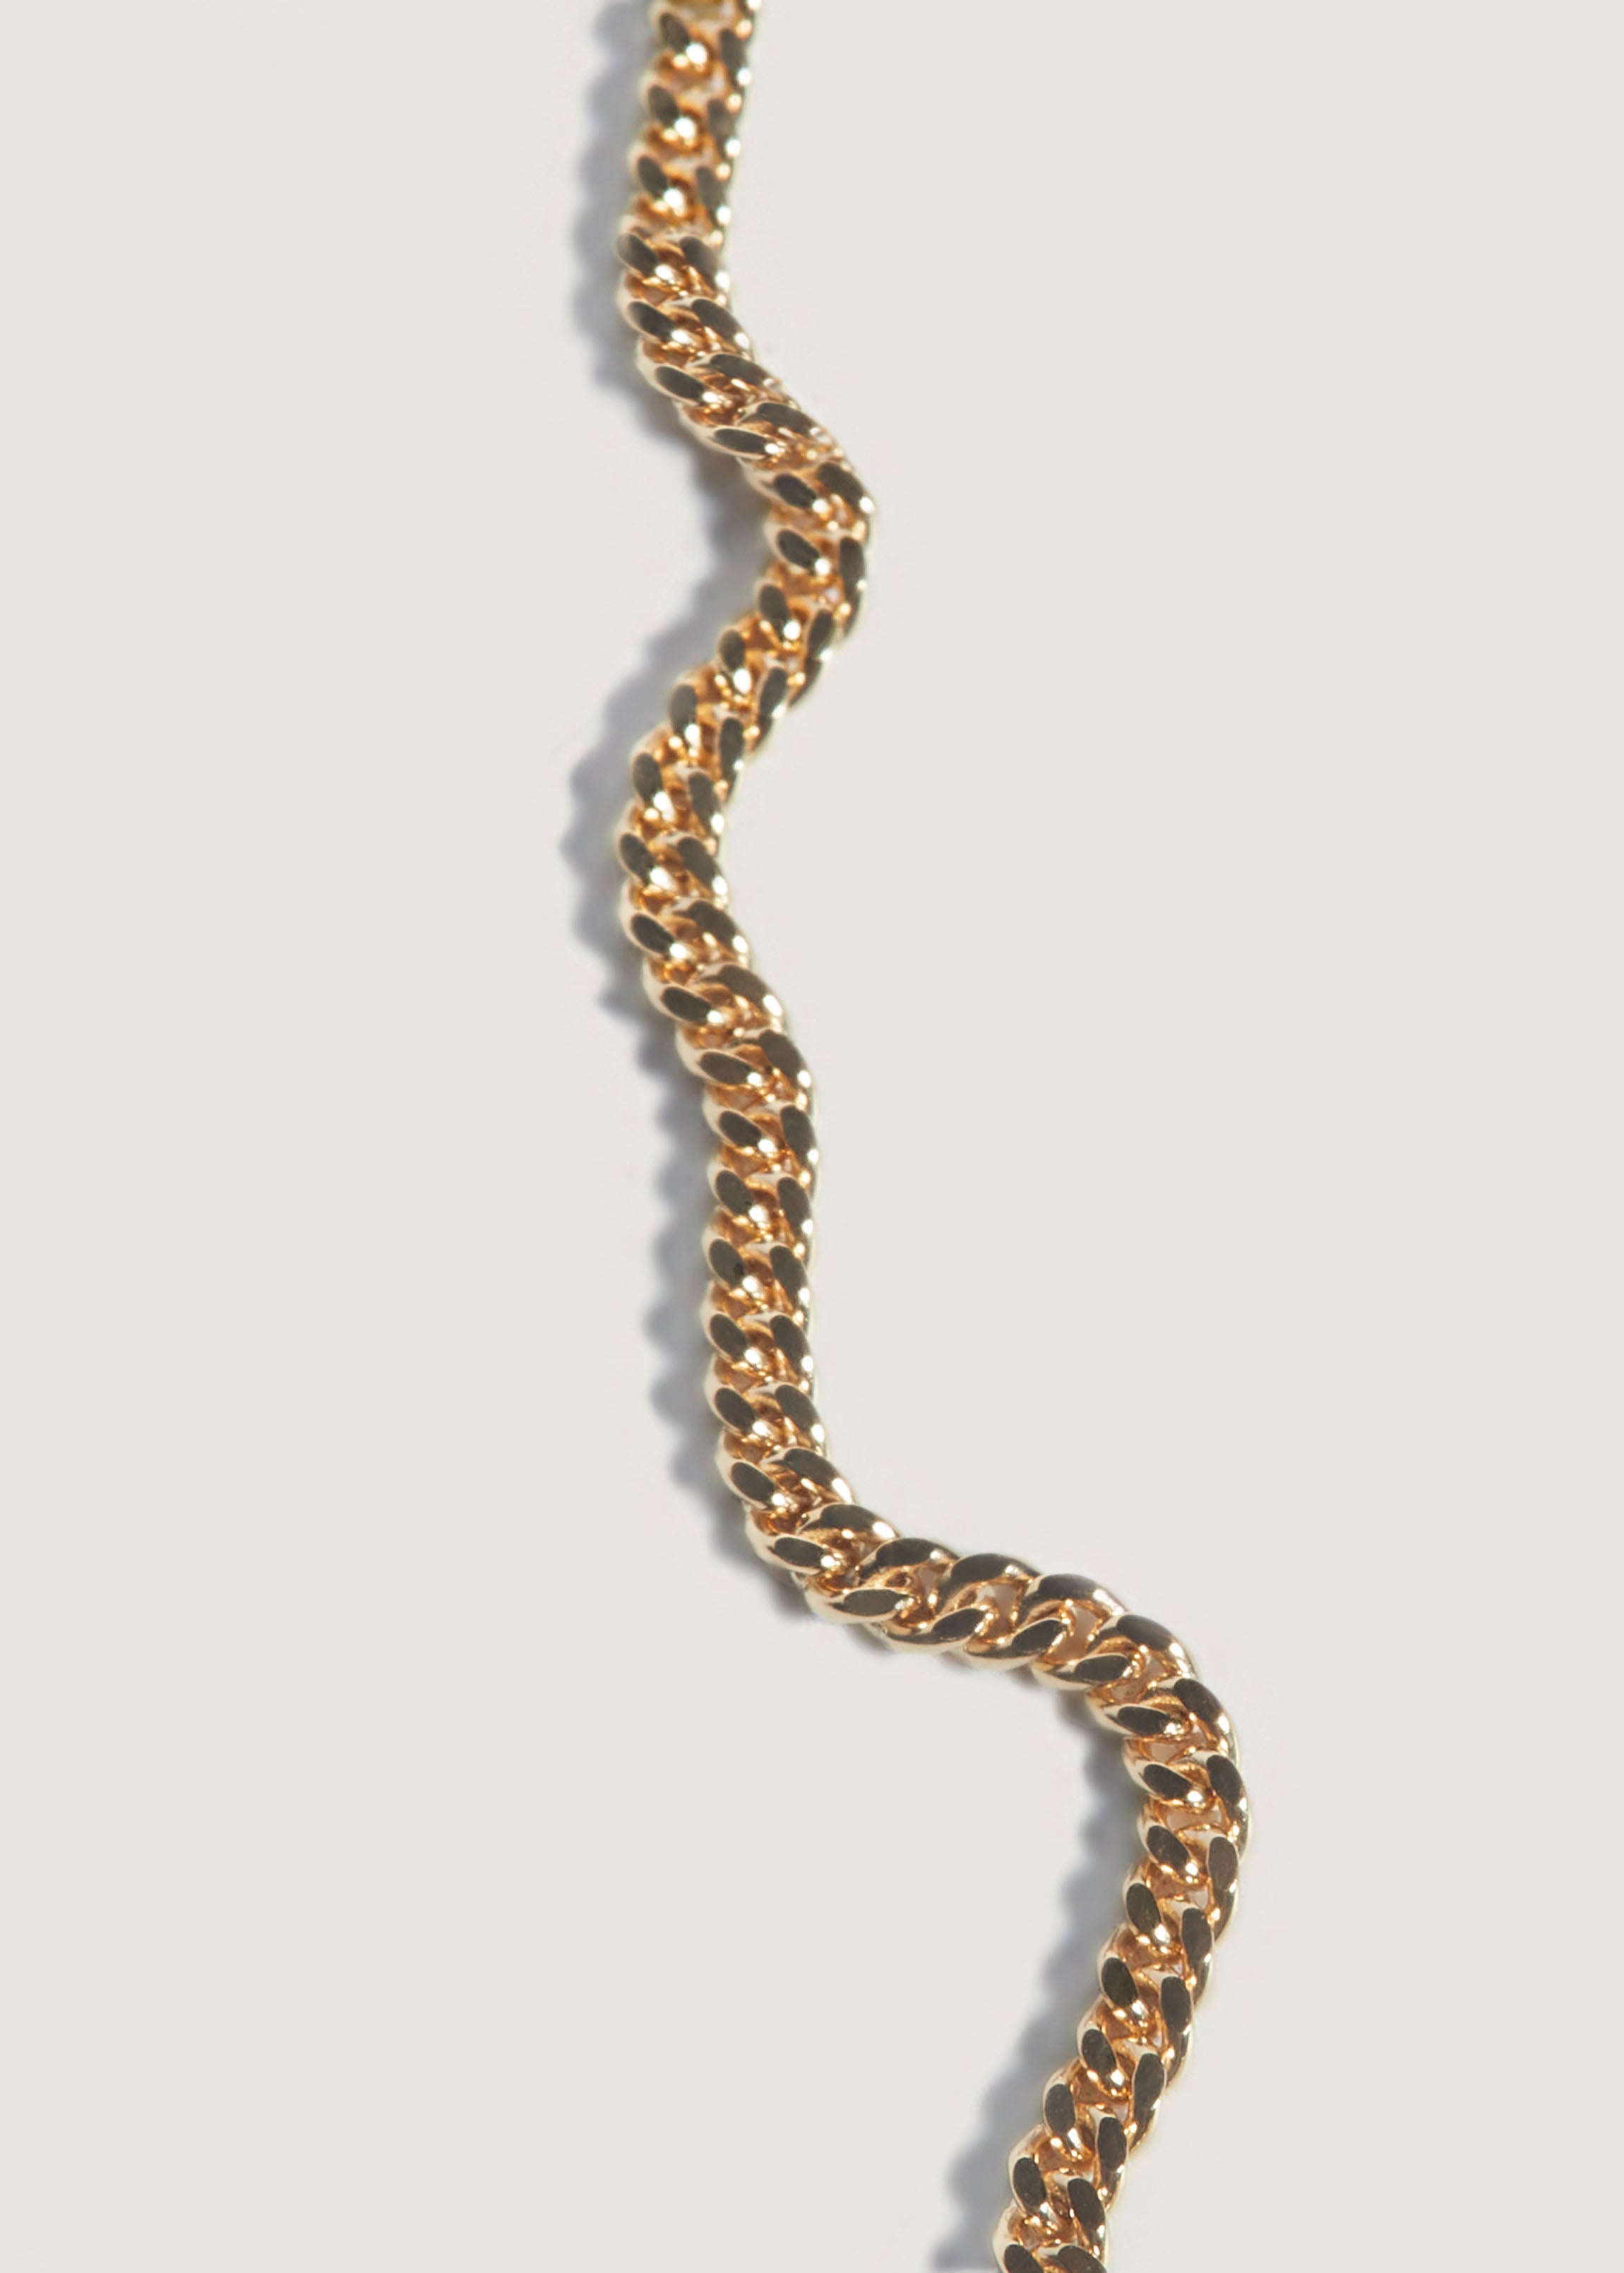 alt="close up of Petite Capri Curb Chain Necklace"